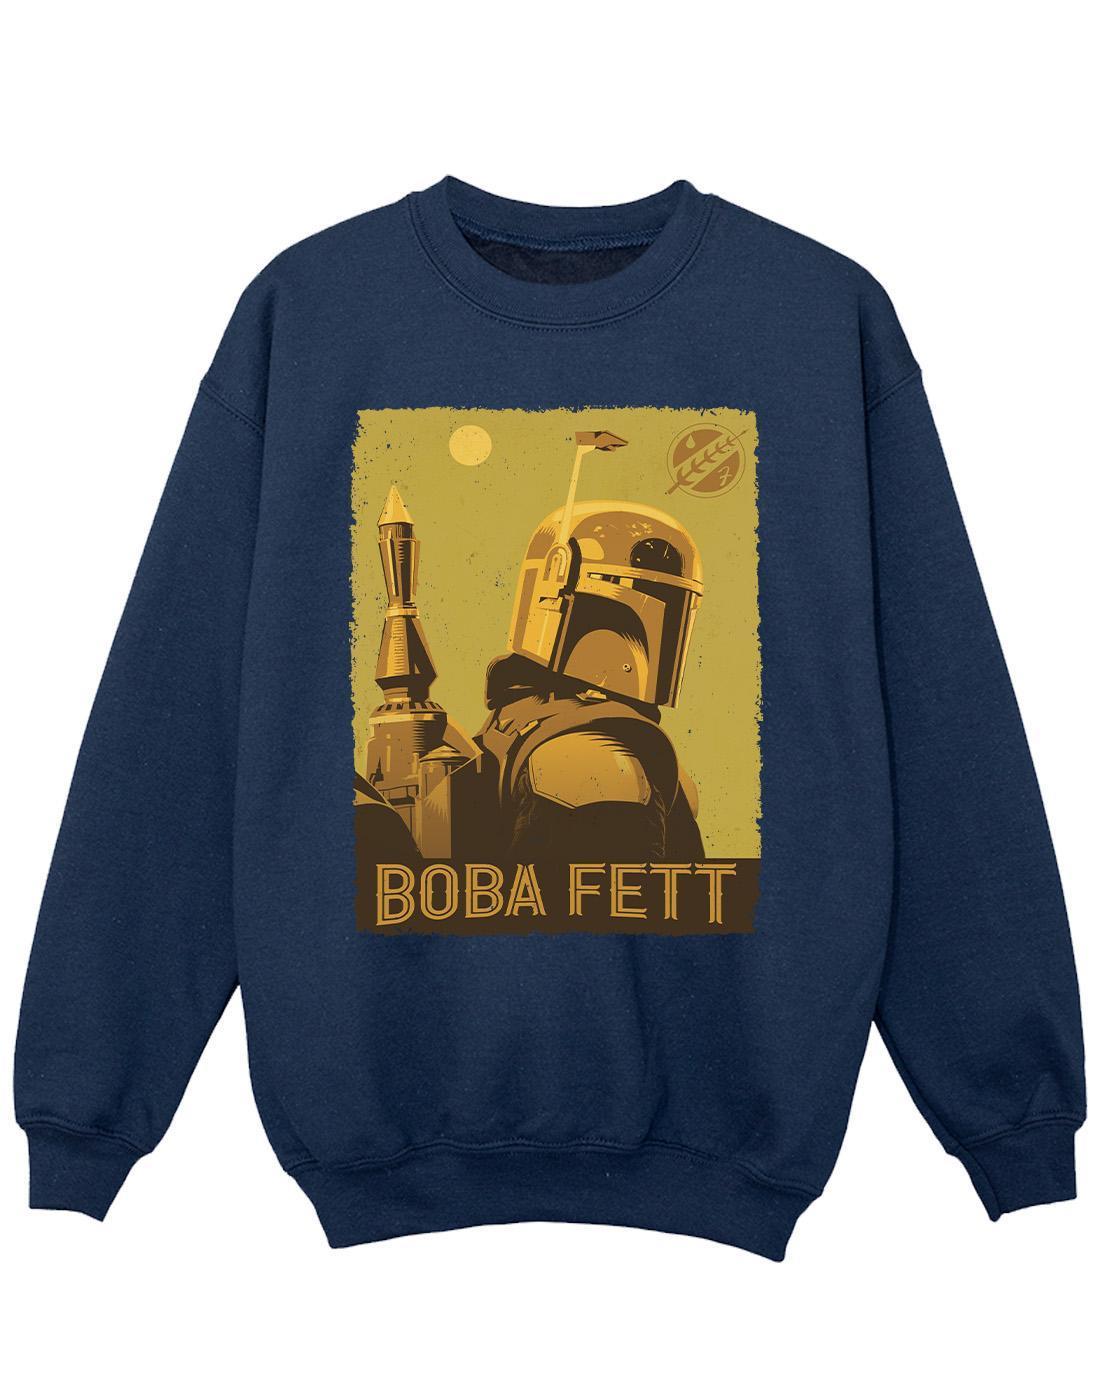 Star Wars Girls The Book Of Boba Fett Planetary Stare Sweatshirt (Navy Blue) (12-13 Years)